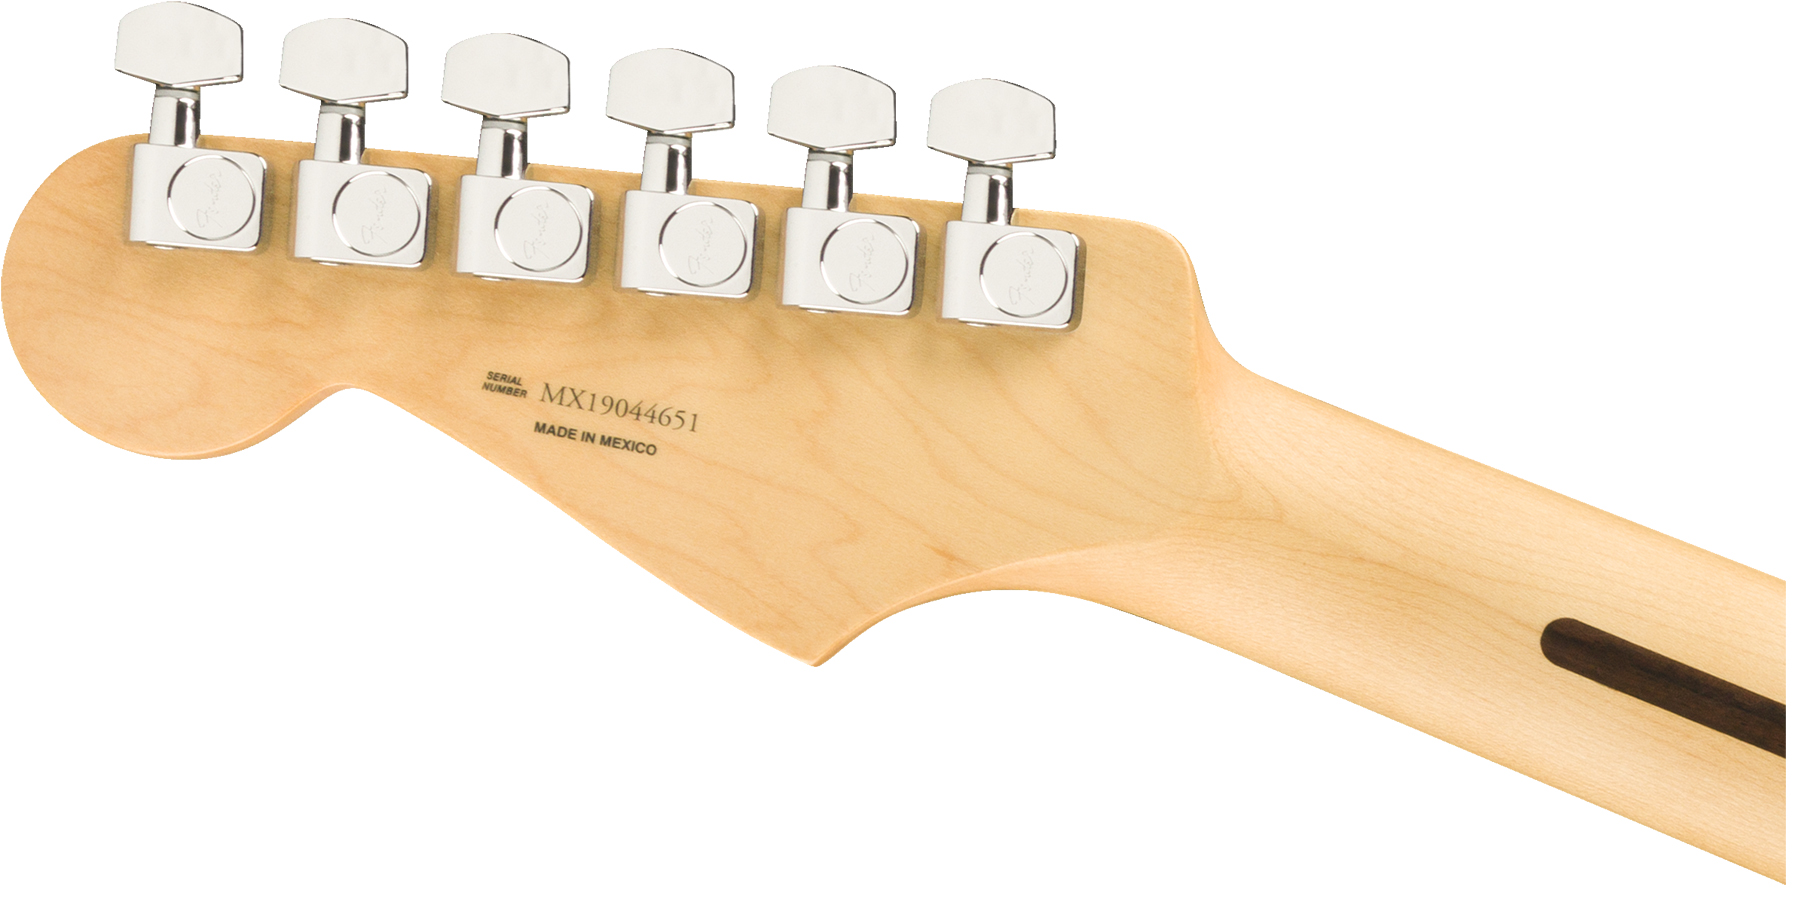 Fender Strat Player Mex Hsh Pf - Silver - Guitare Électrique Forme Str - Variation 2